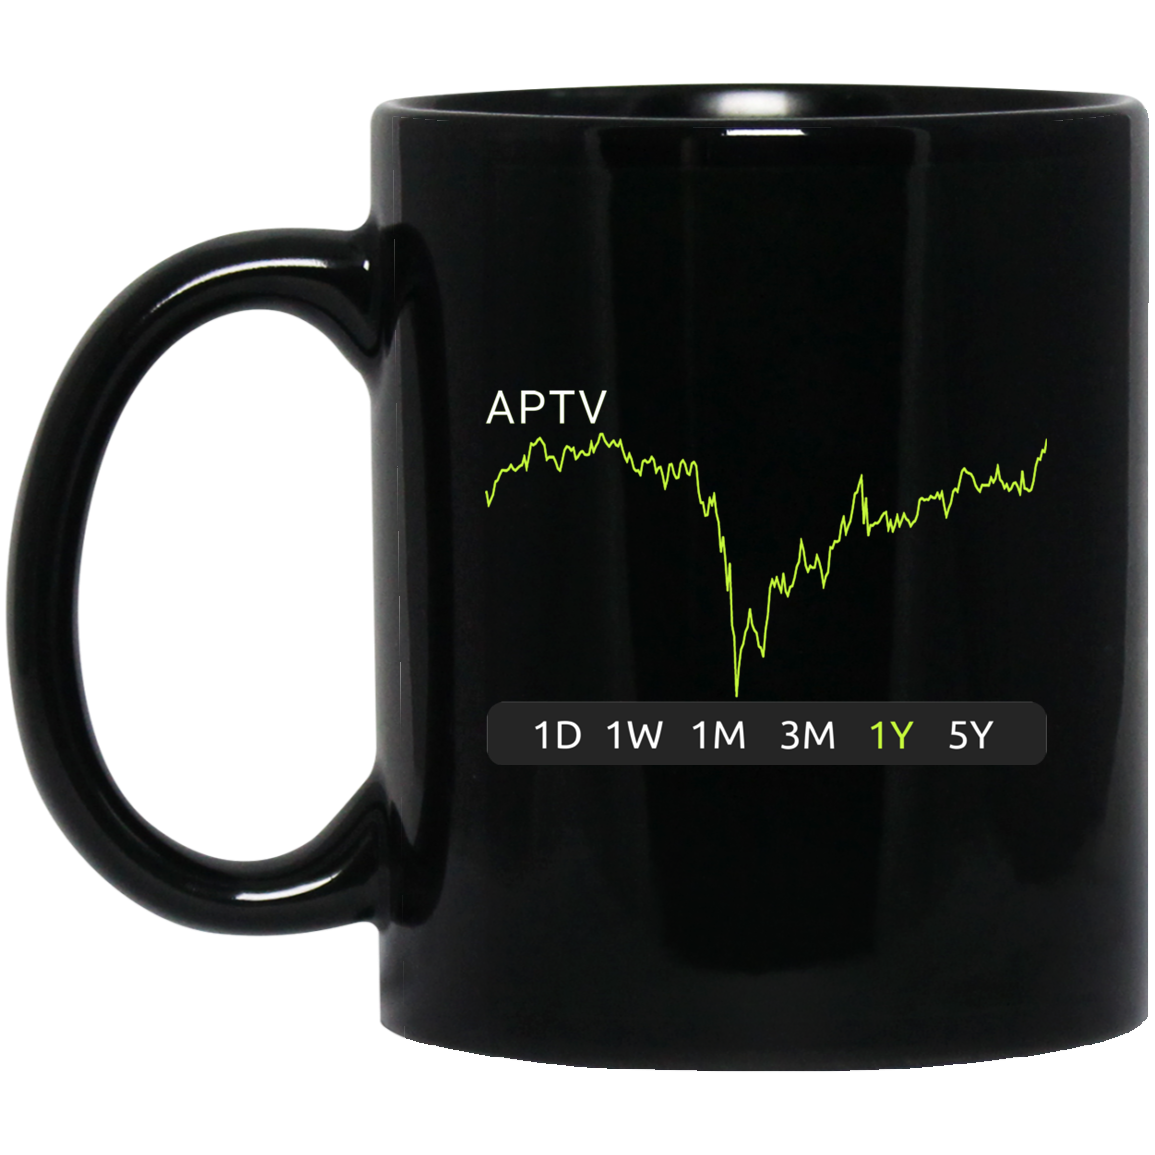 APTV Stock 1y Mug